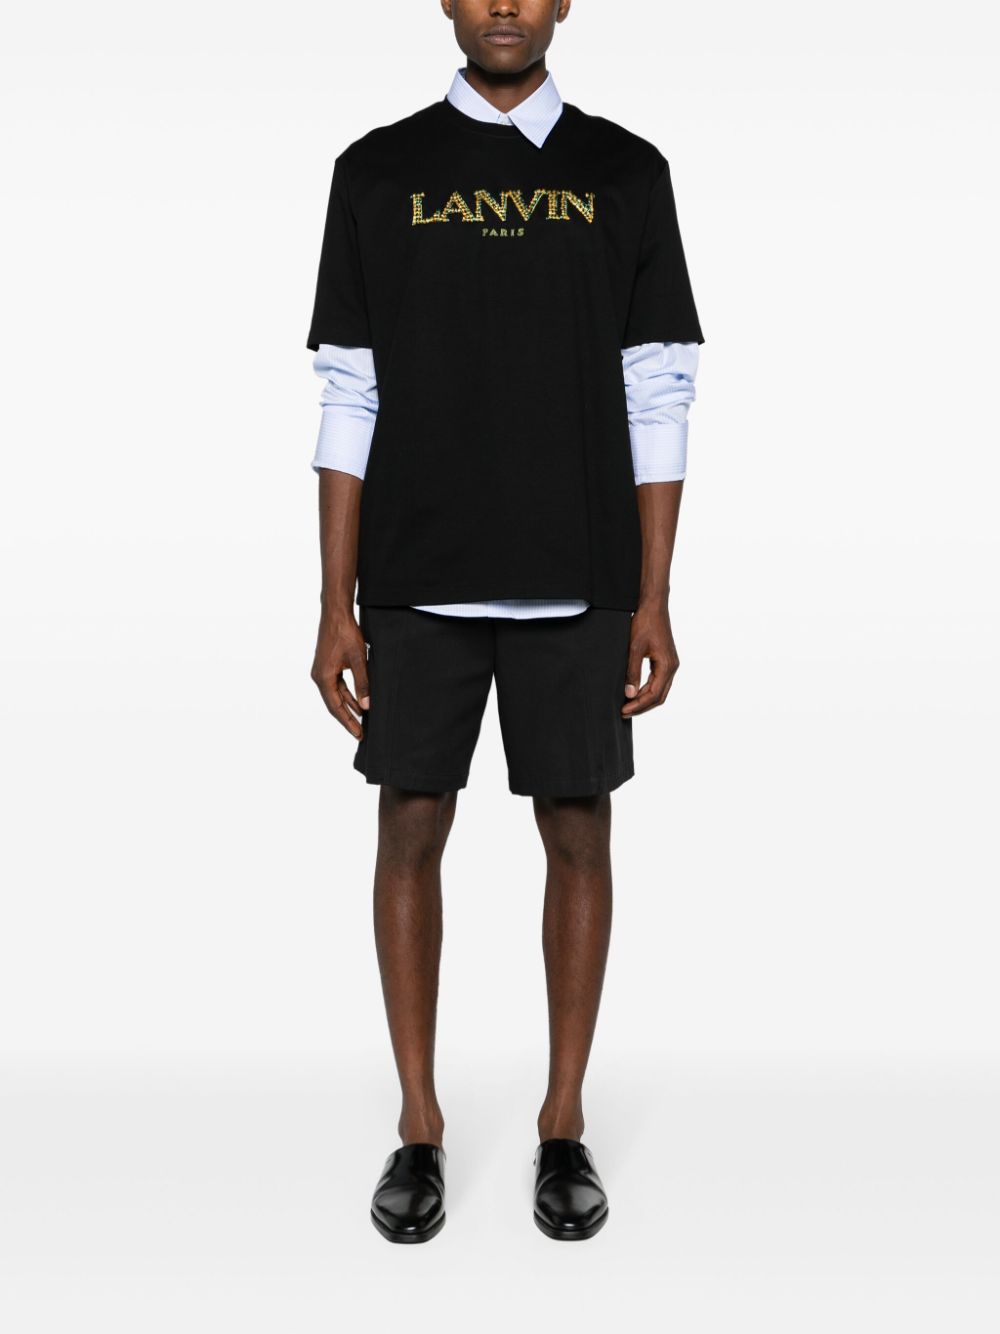 Lanvin T-shirt met geborduurd logo Zwart